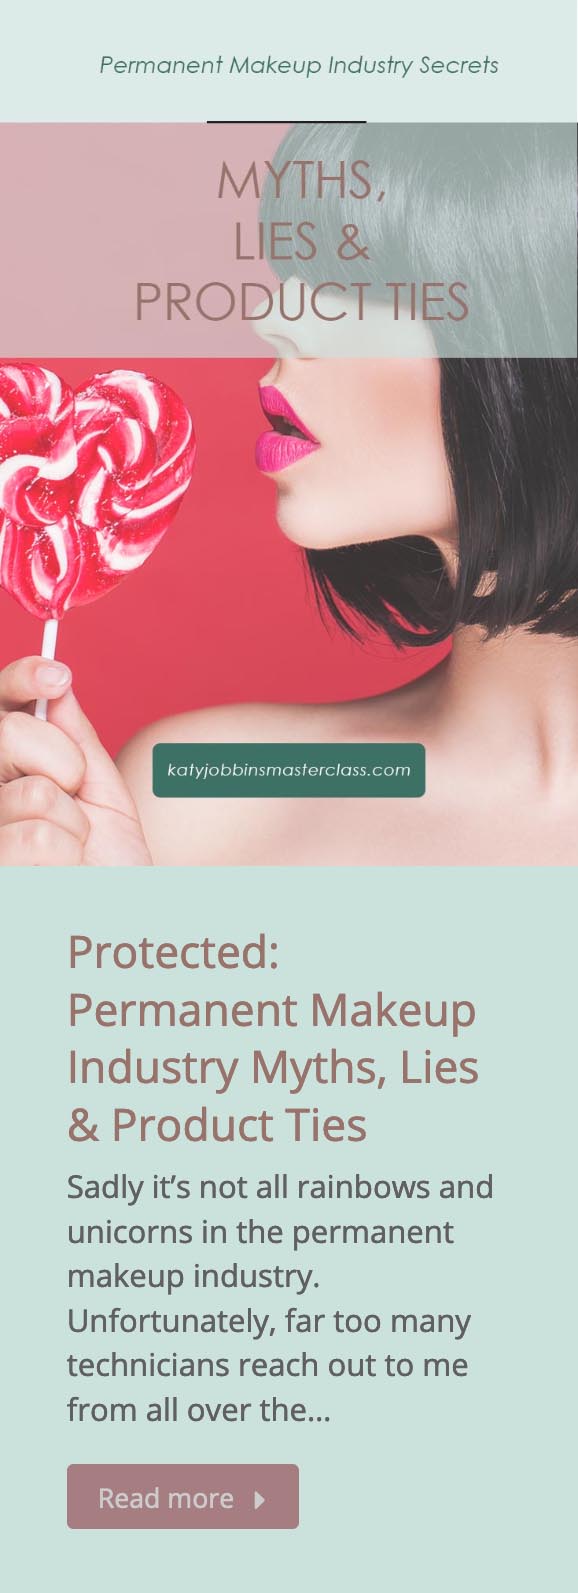 myths lies & product ties blog